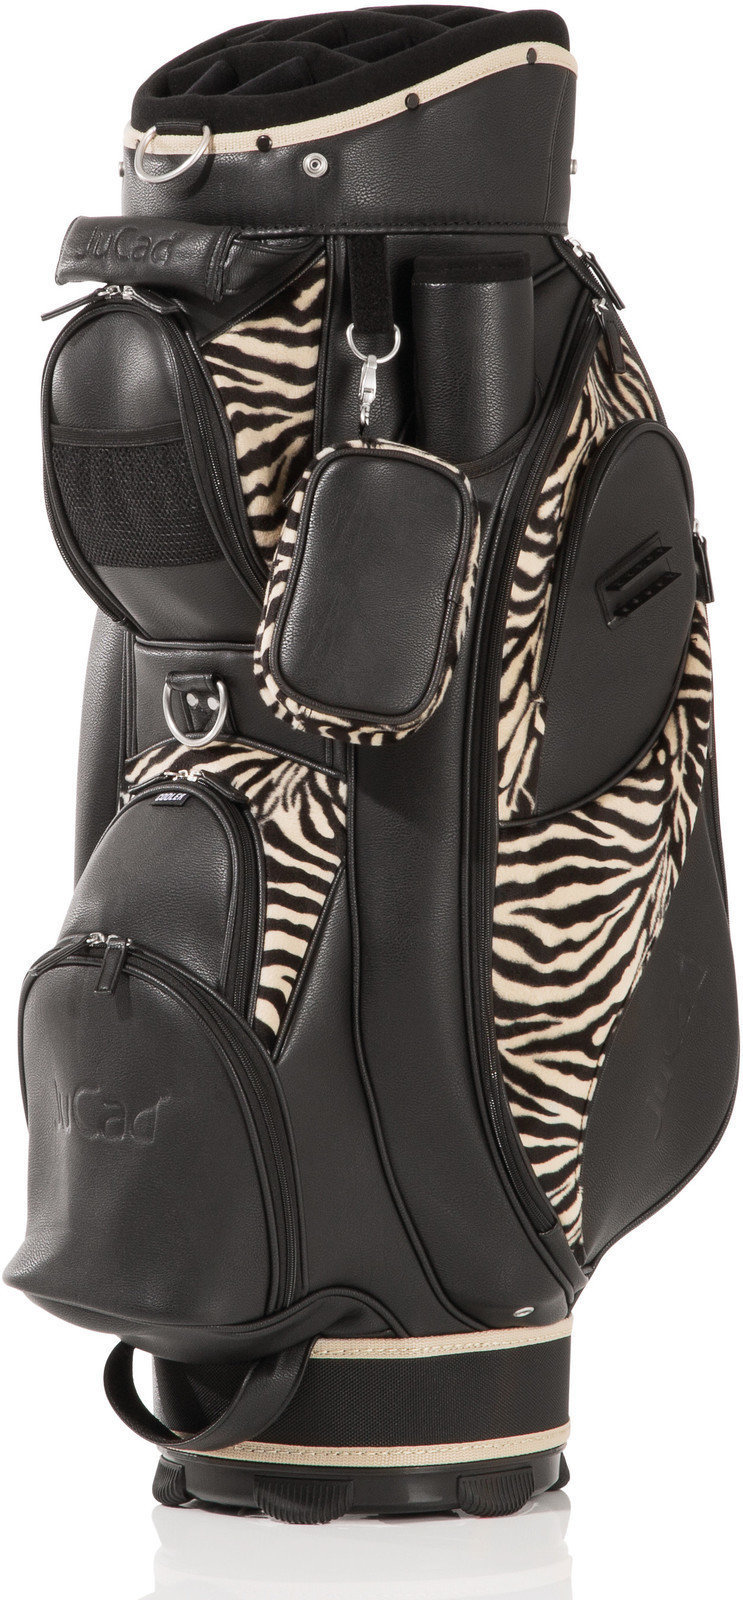 Golflaukku Jucad Style Black/Zebra Cart Bag